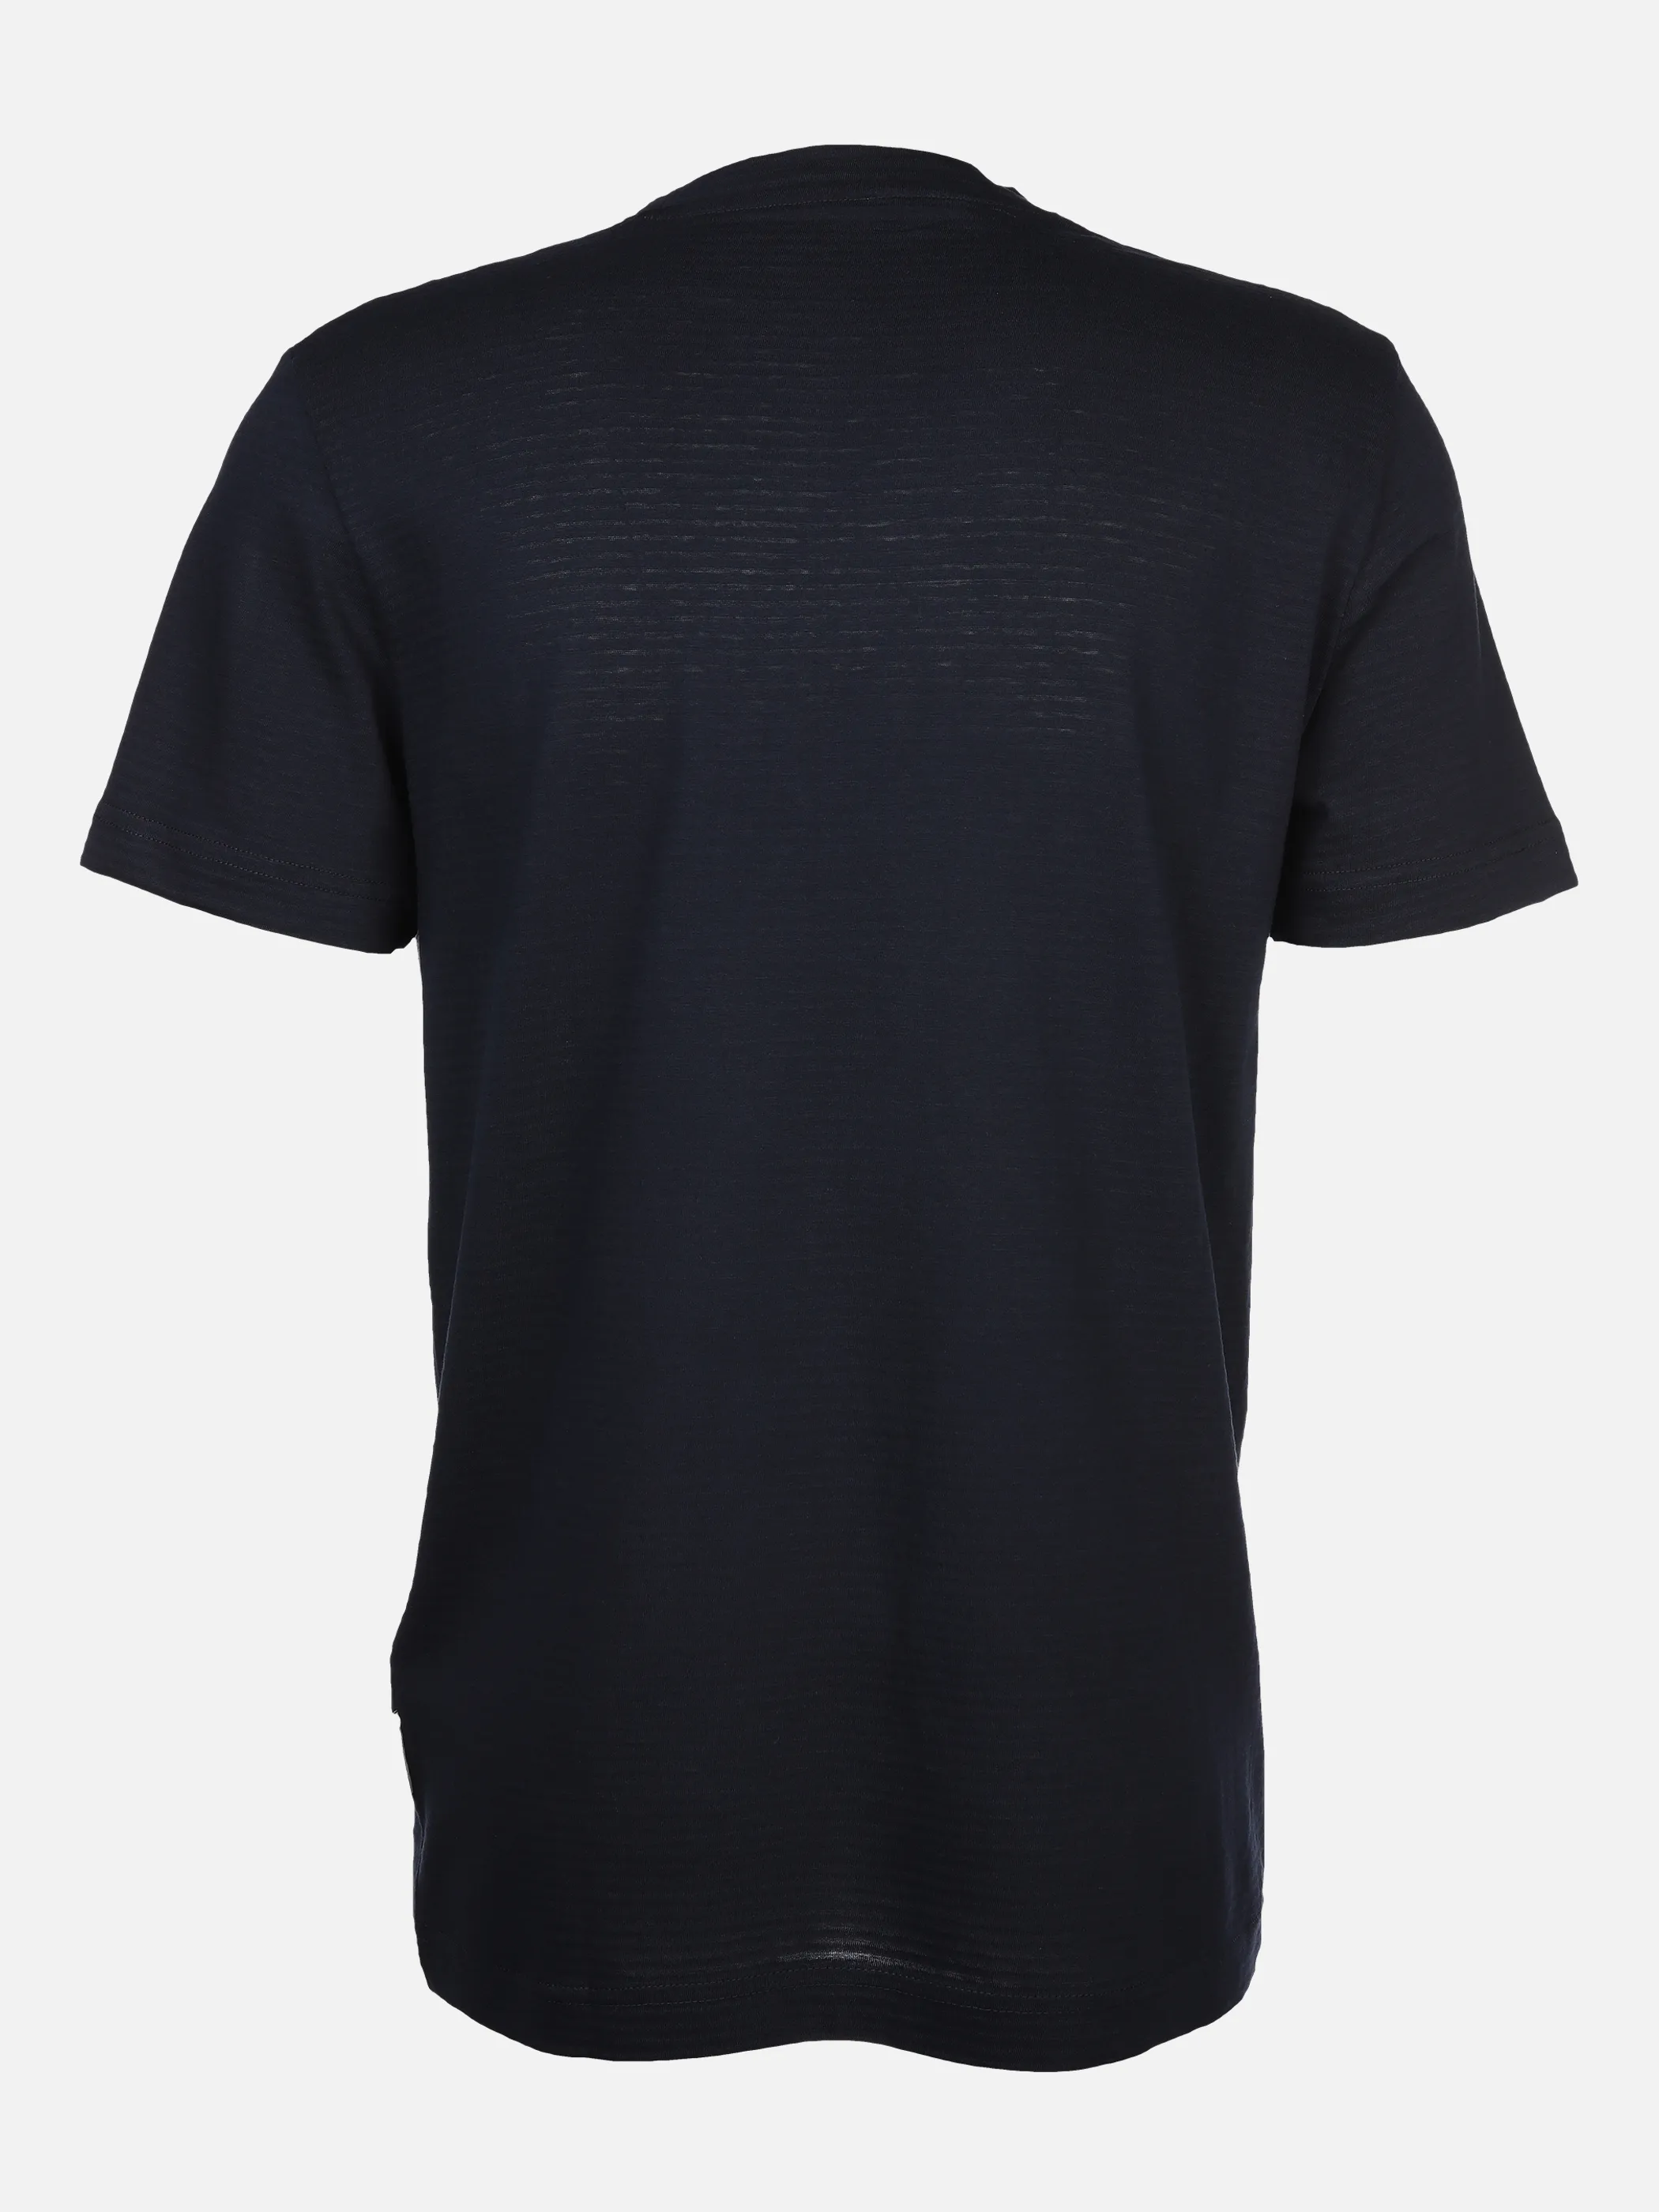 Tom Tailor 1036319 basic t-shirt with pocket Blau 880551 10668 2